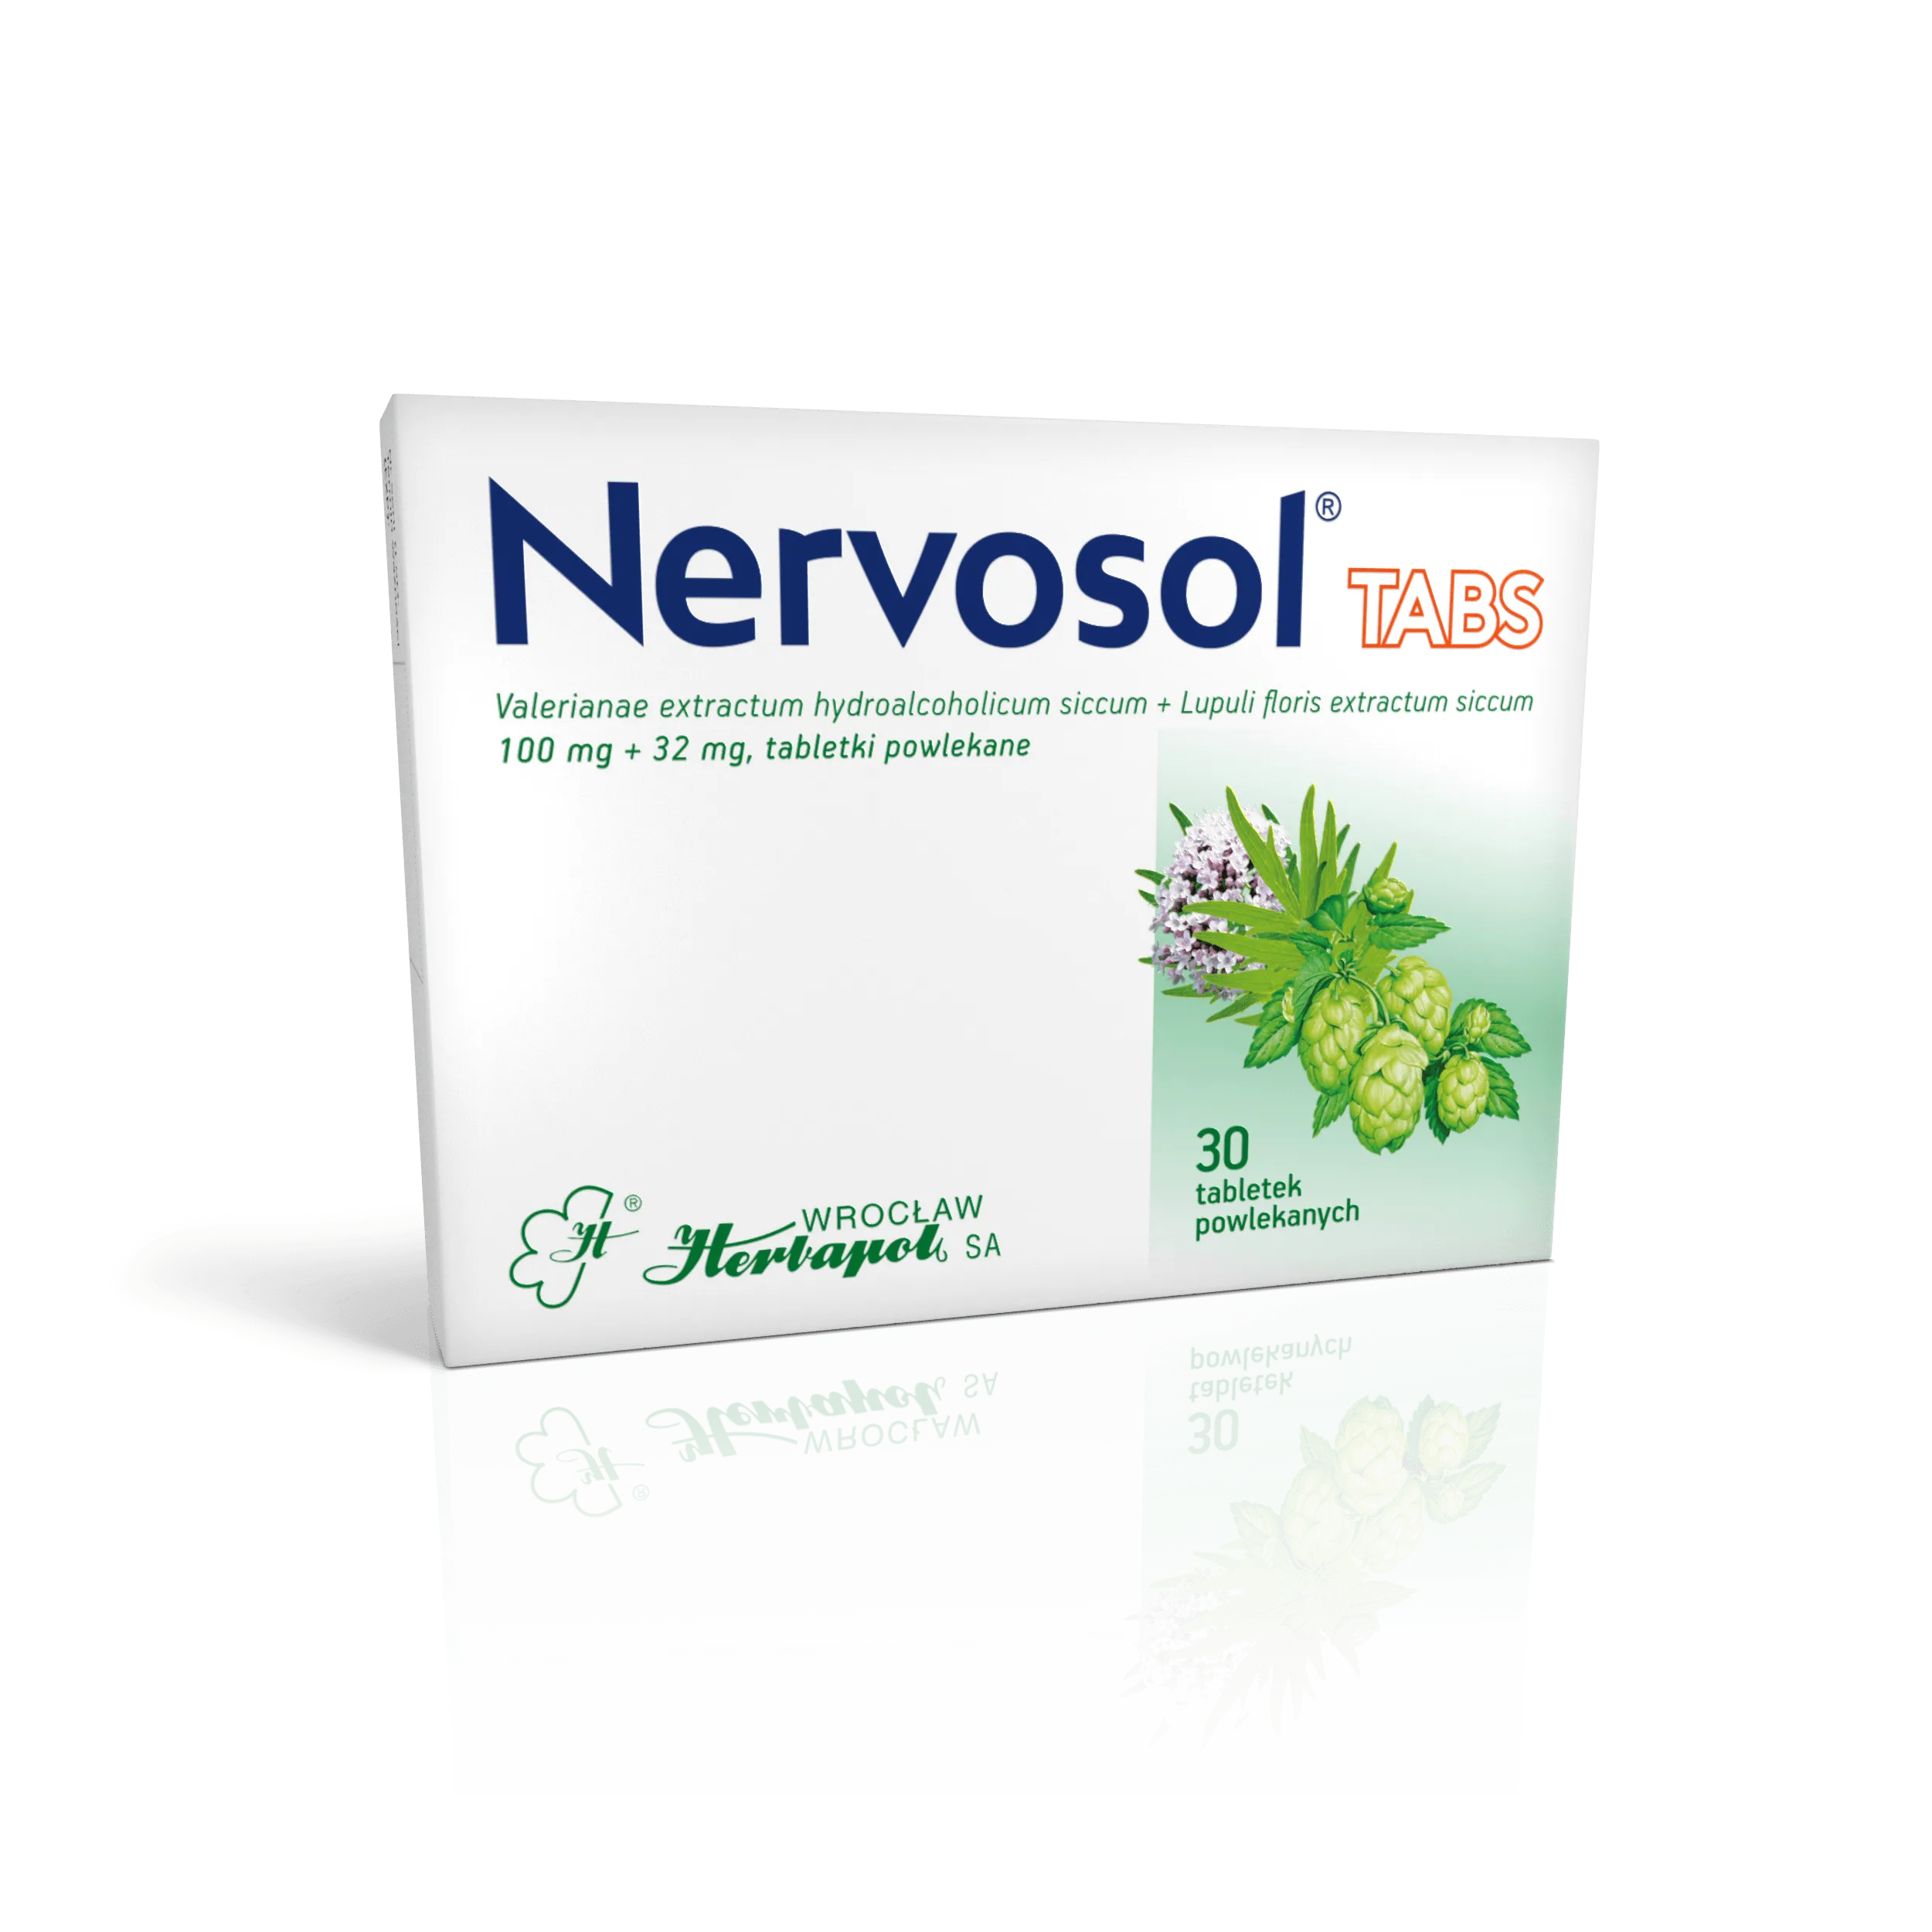 Nervosol Tabs, 30 tabletek